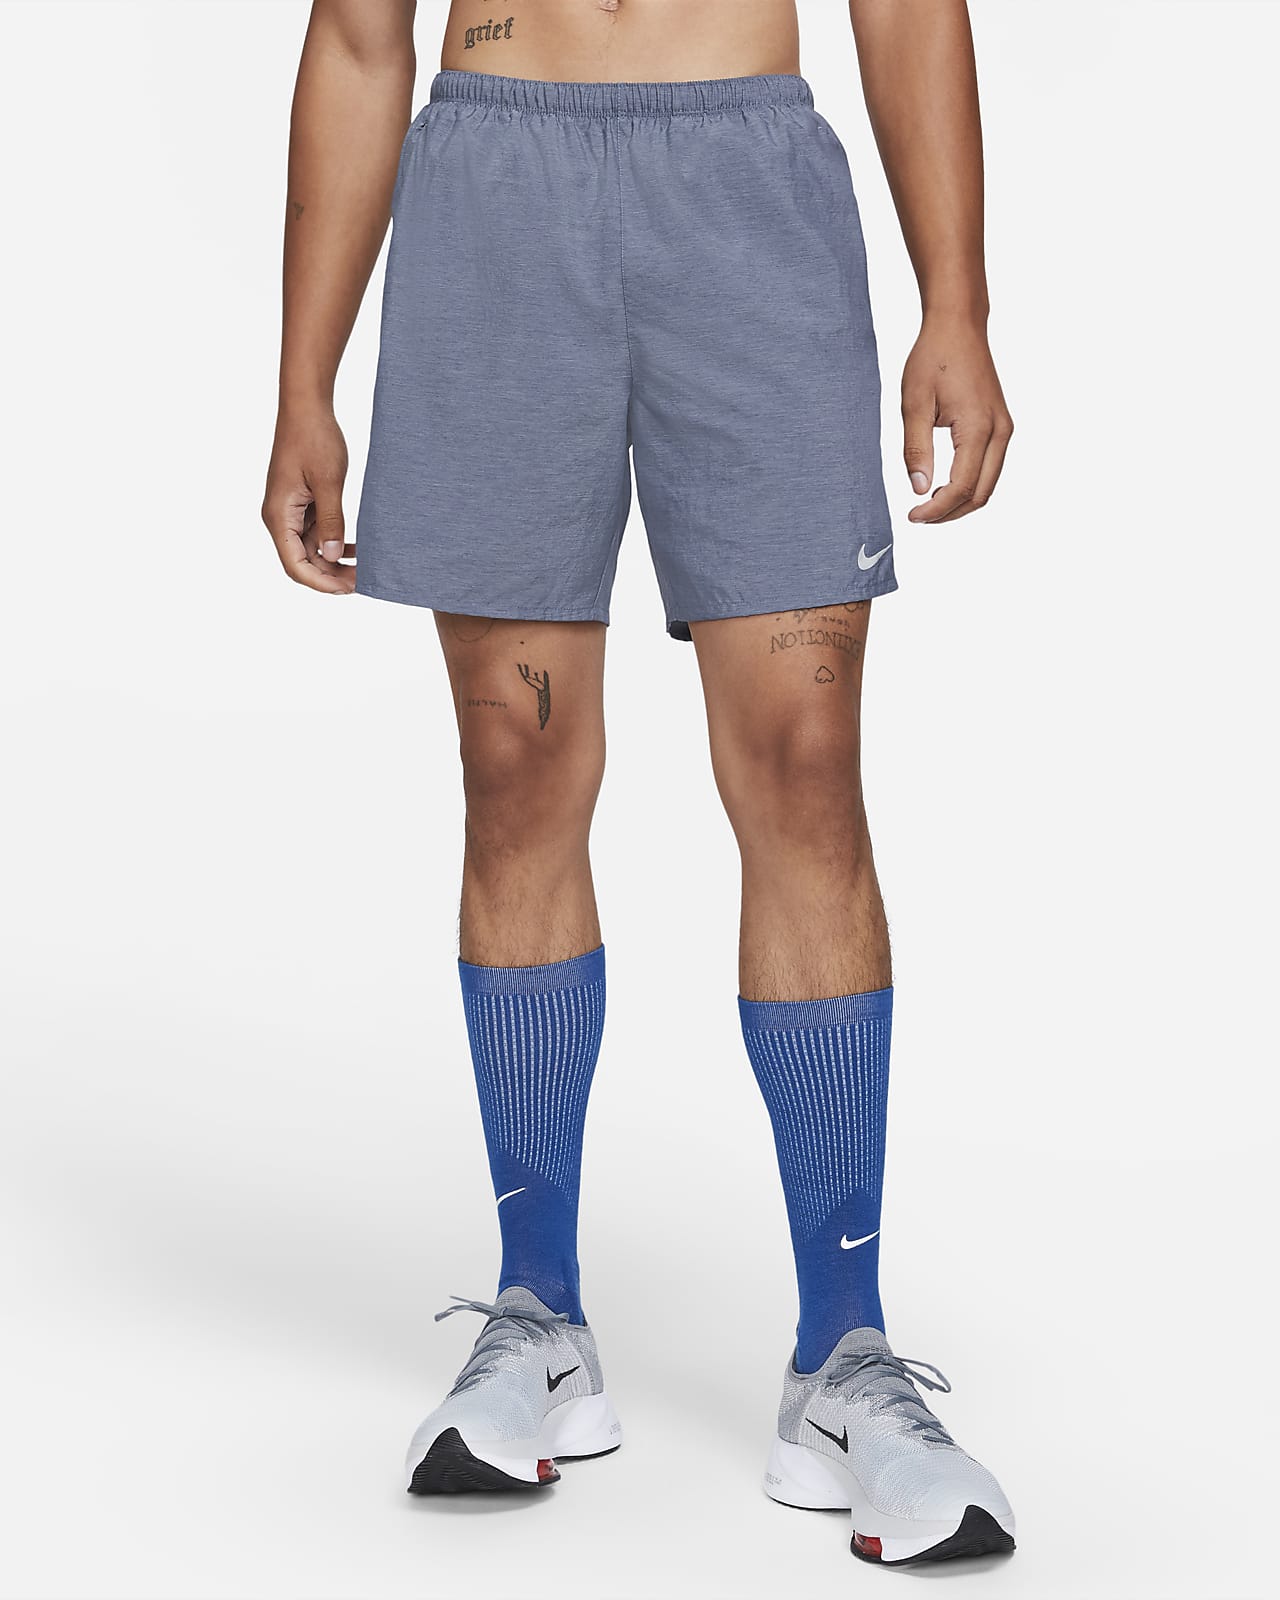 men's challenger shorts